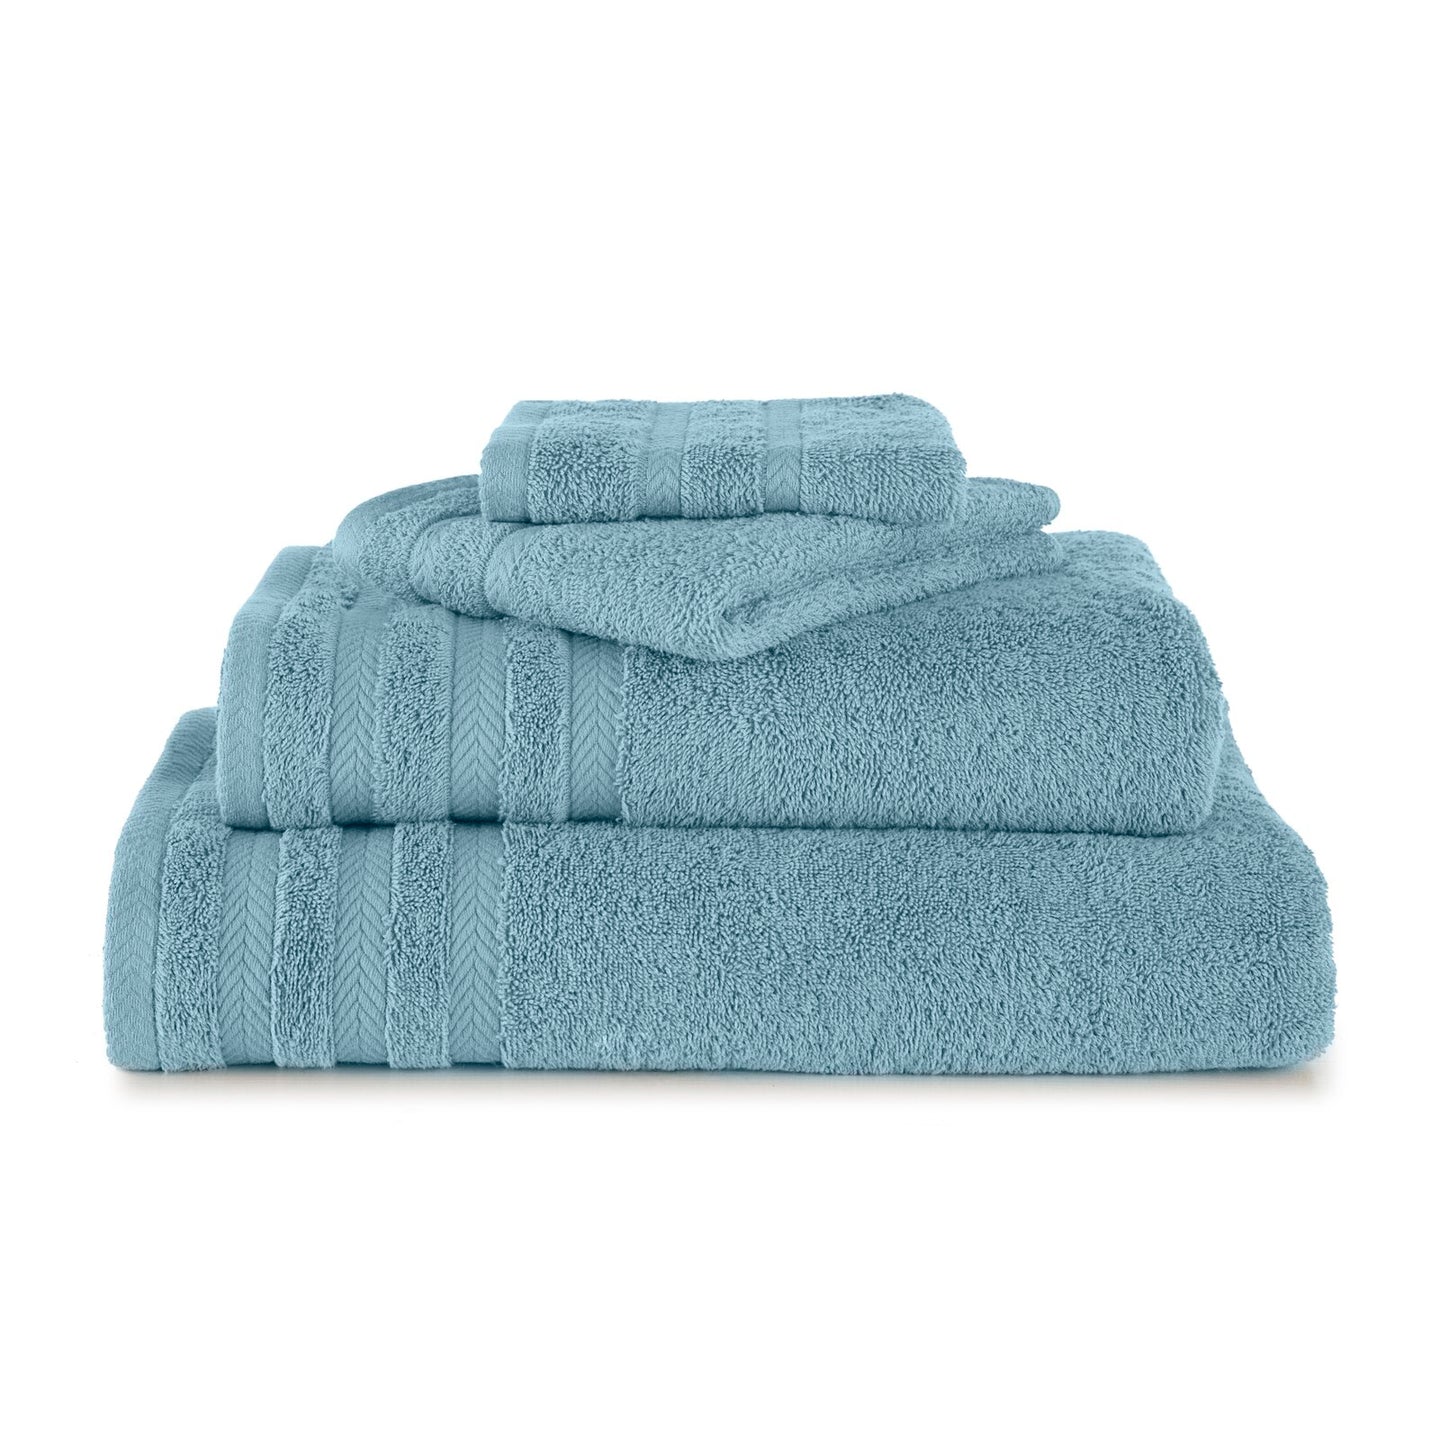 Egyptian-Quality Cotton Towel Set- set of 4Aquamarine #29ha